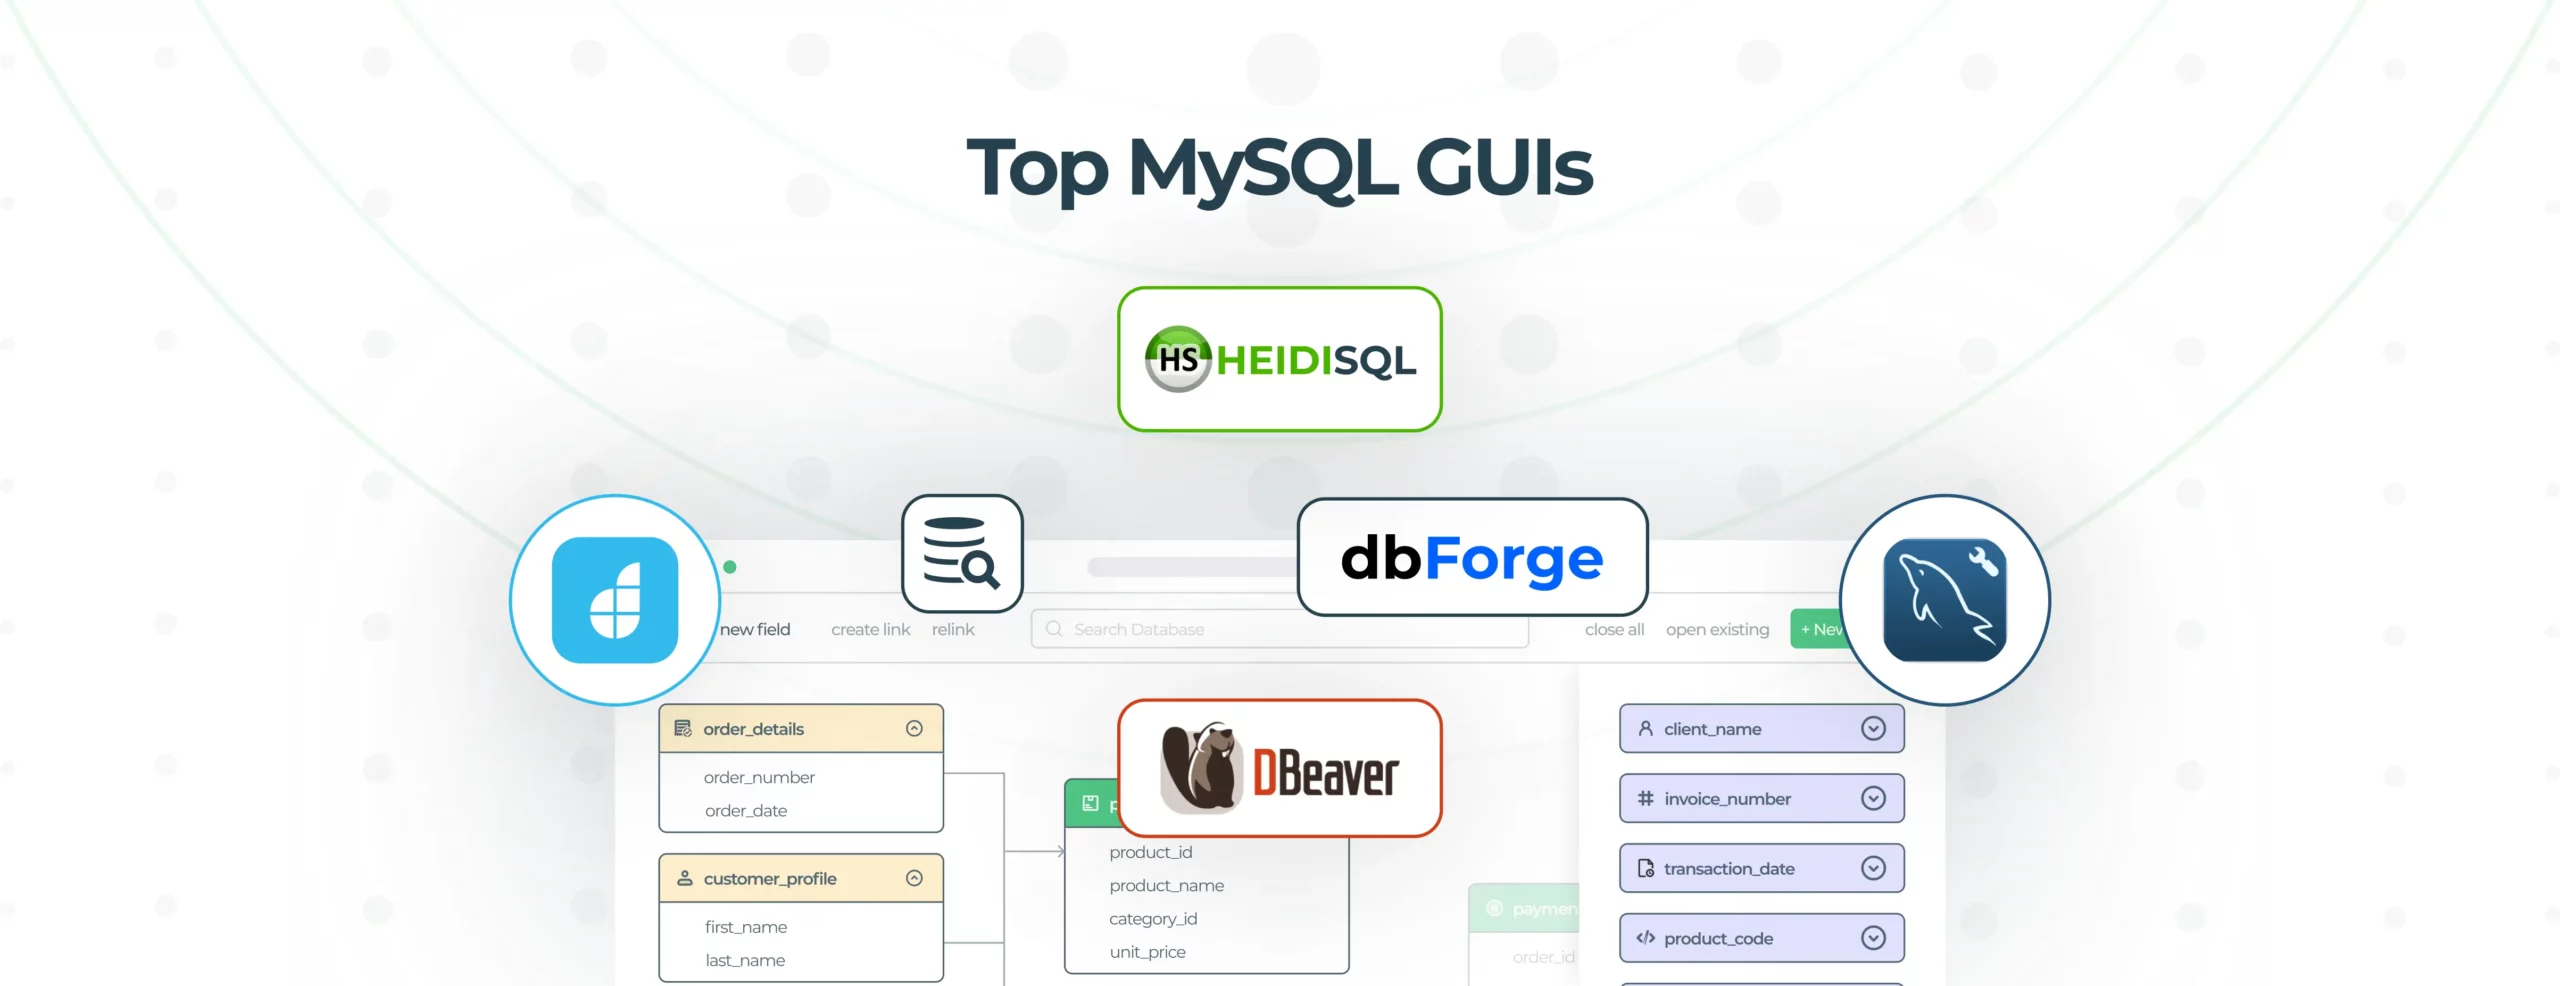 Top 5 MySQL GUI tools in 2021